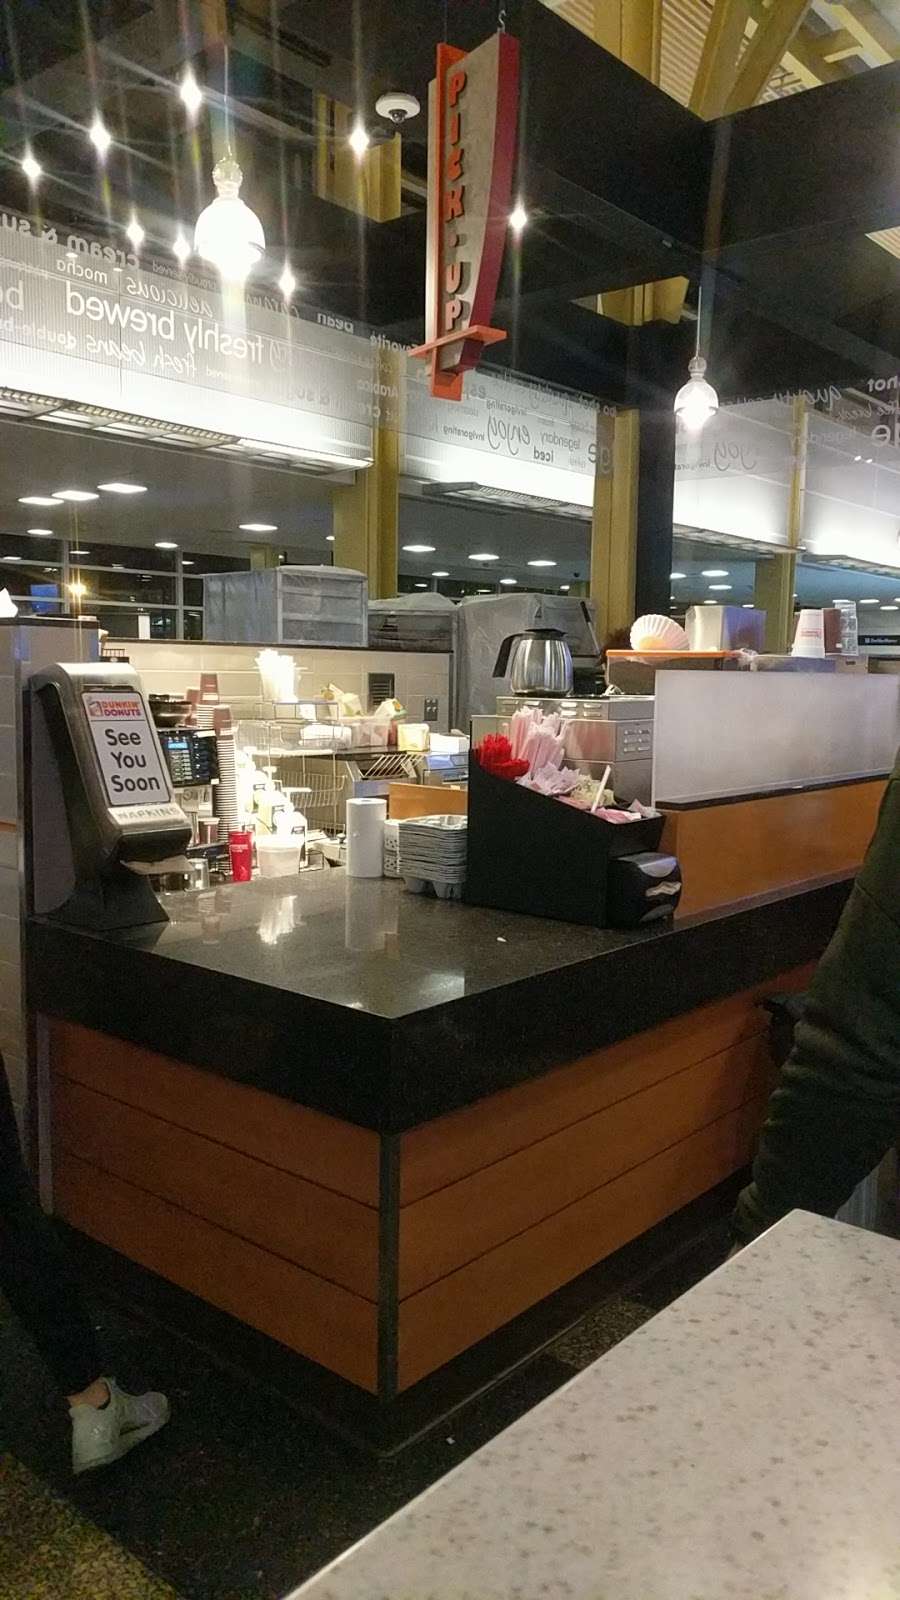 Dunkin Donuts | 1 National Airport Cart 2 Post Center Pier, Arlington, VA 22202 | Phone: (703) 414-0885